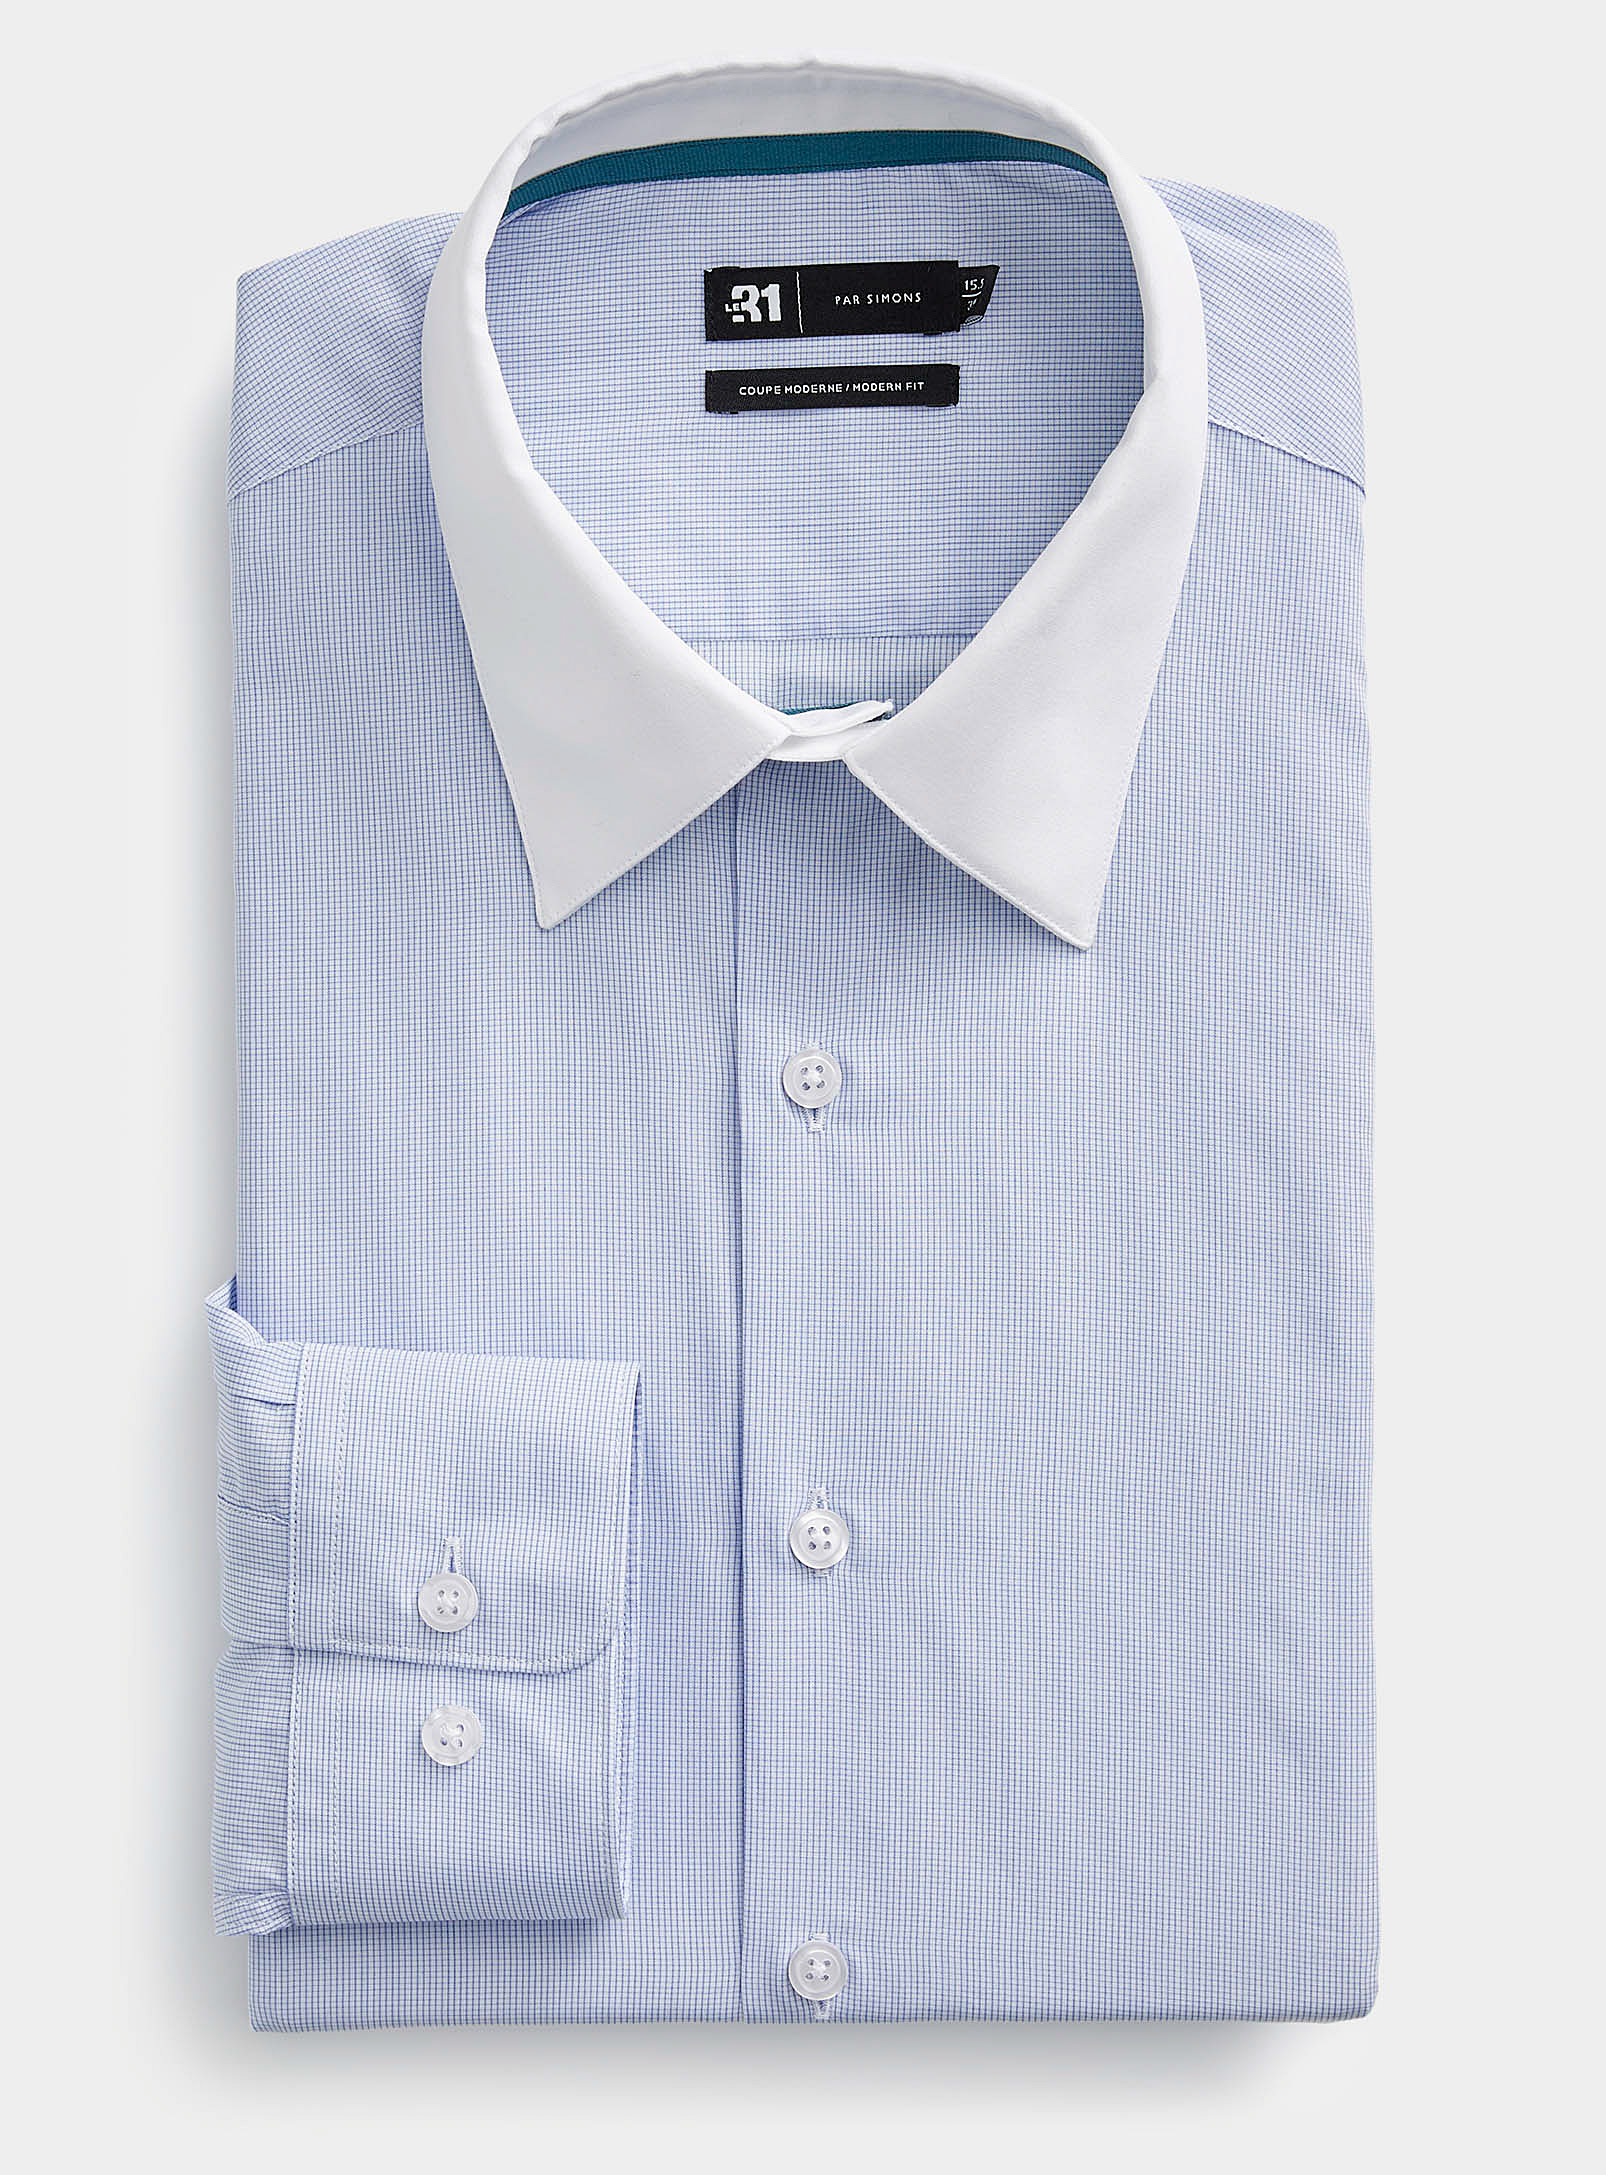 Le 31 - Men's Contrast-collar mini-check shirt Modern fit